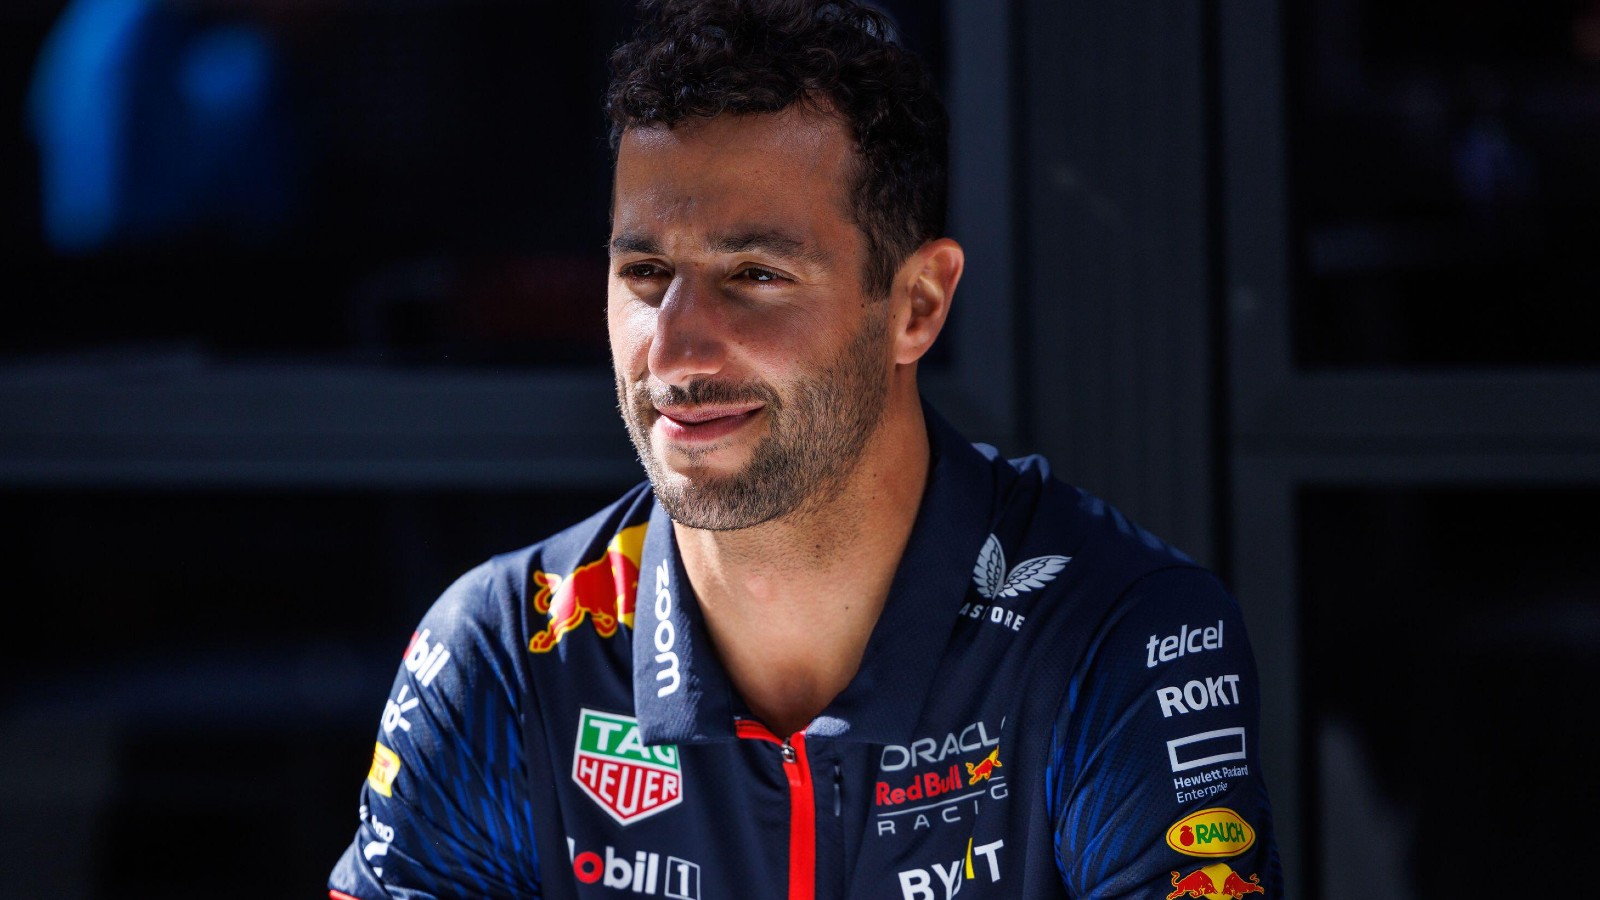 Daniel Ricciardo, Red Bull, sat down and smiling. Australia, March 2023.